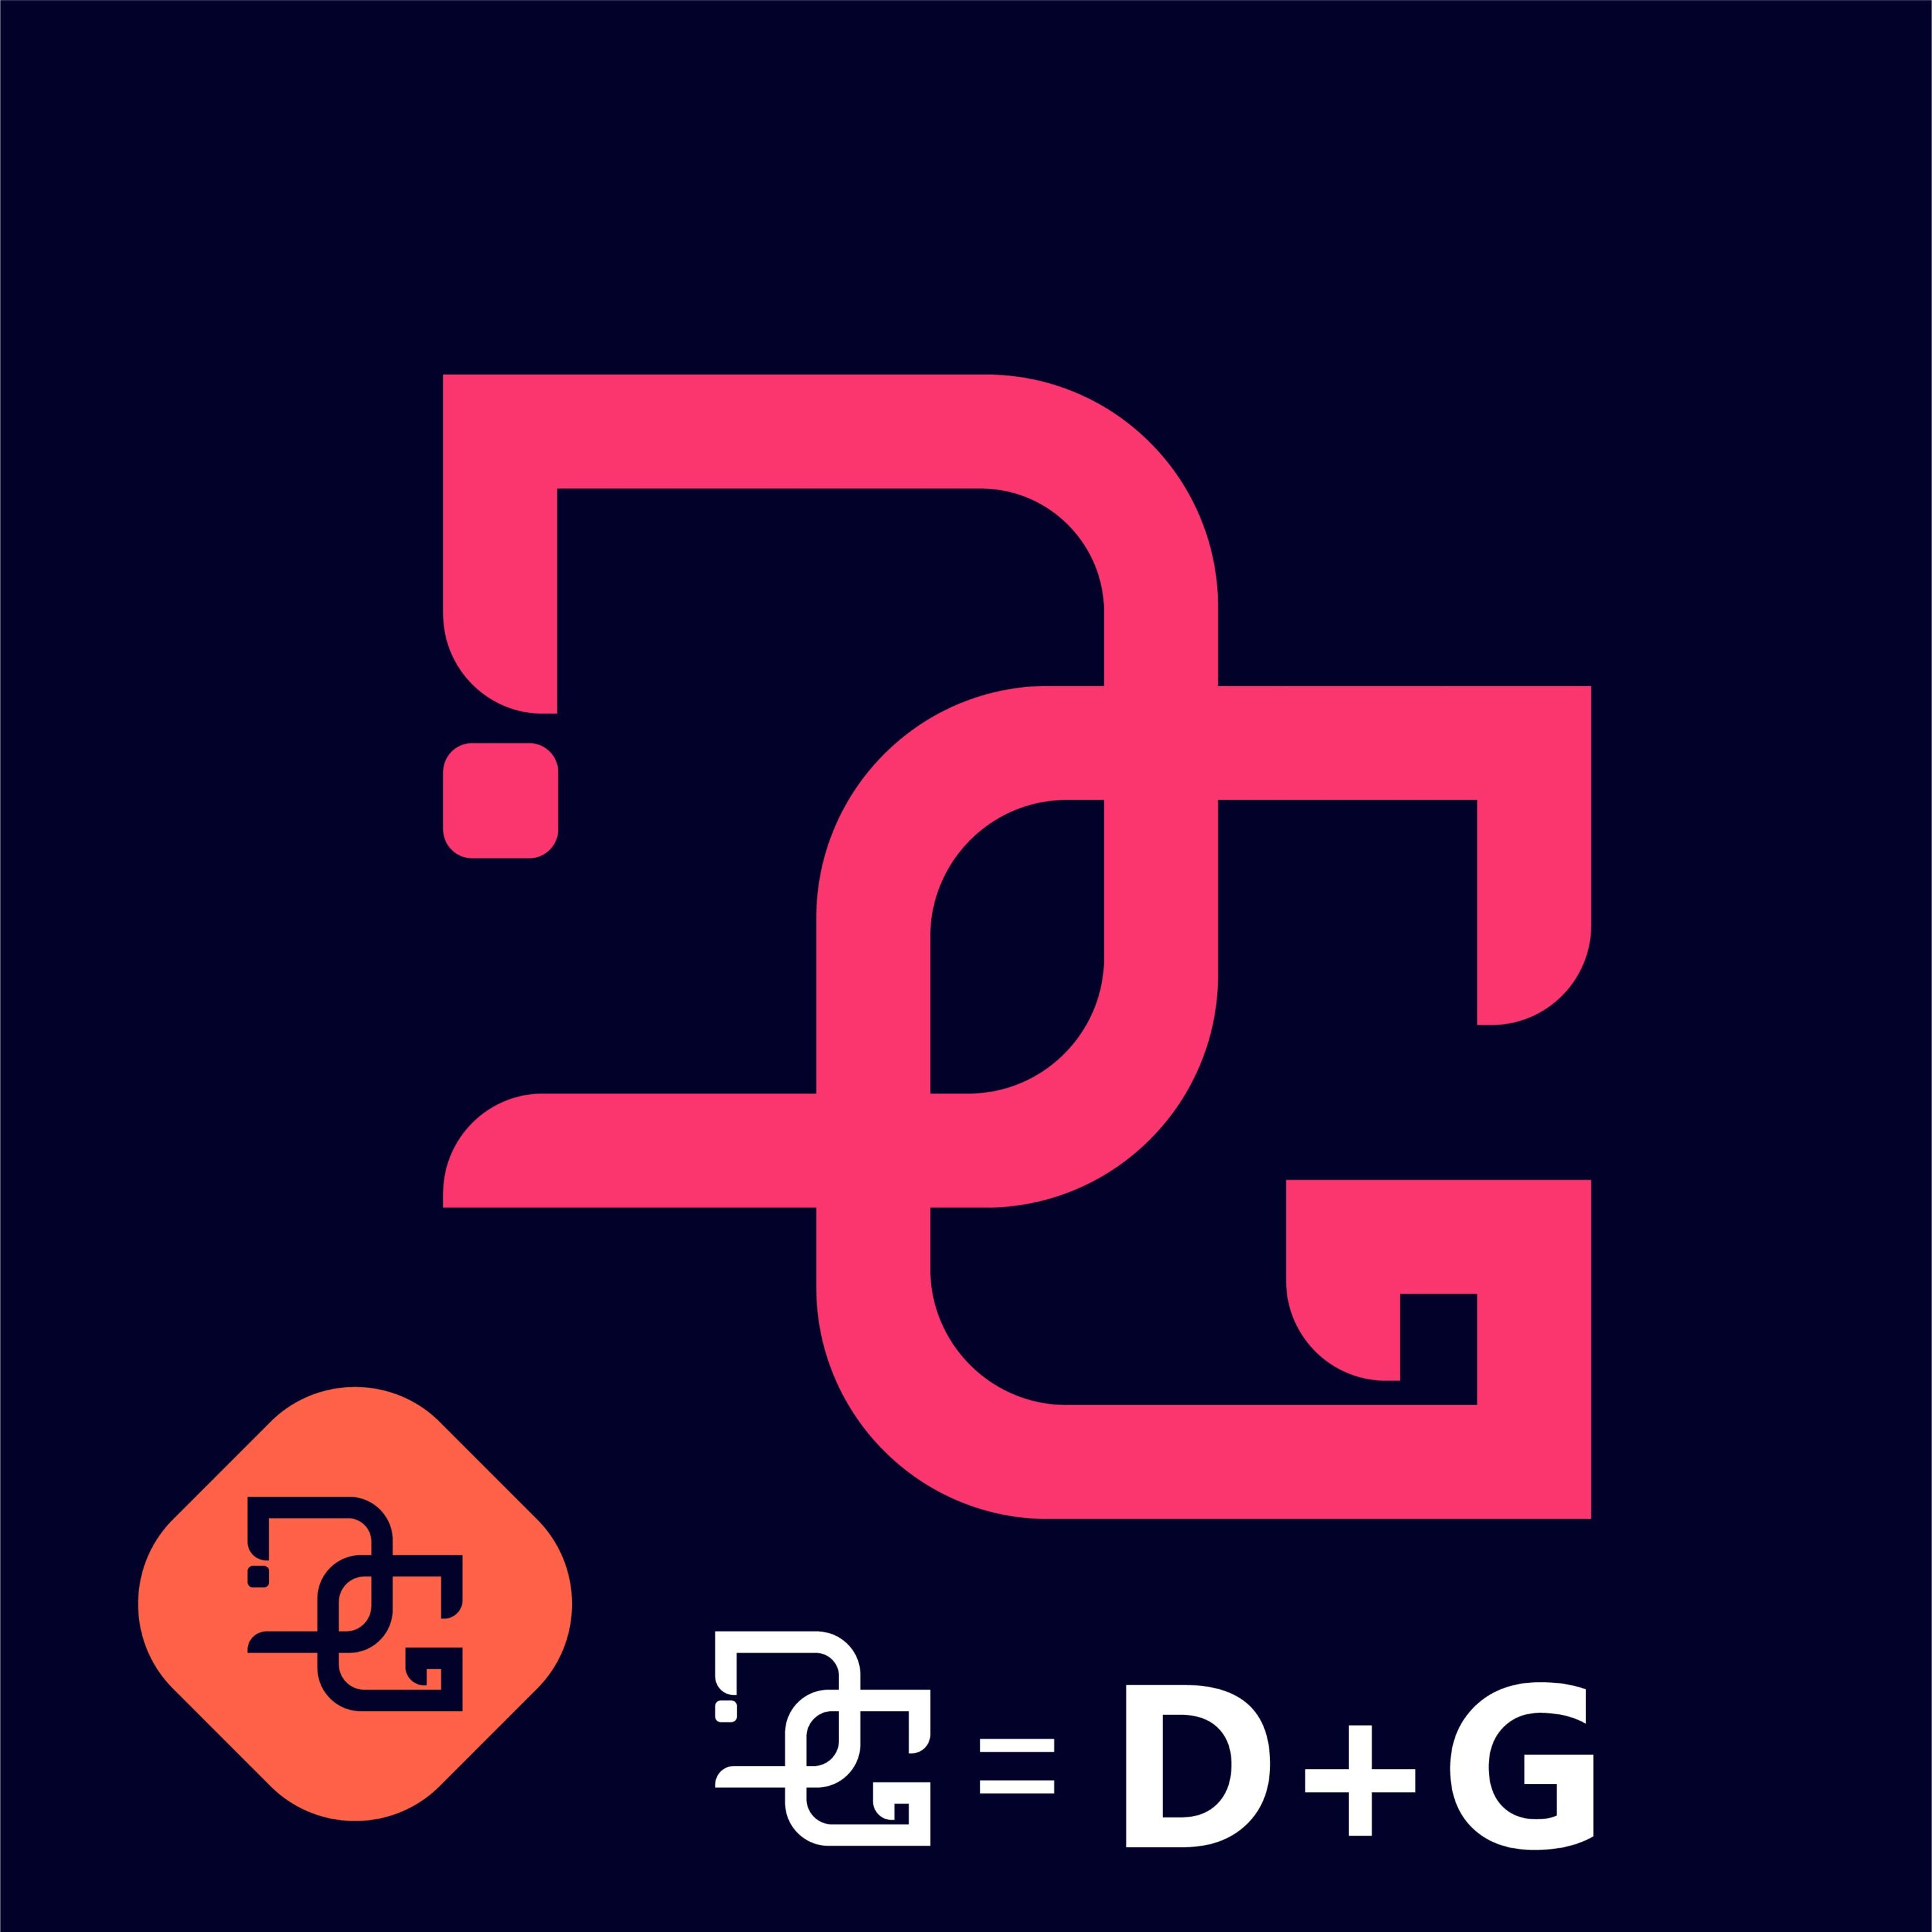 The Best Graphic Design Letter Icon Logos D G pinterest image.